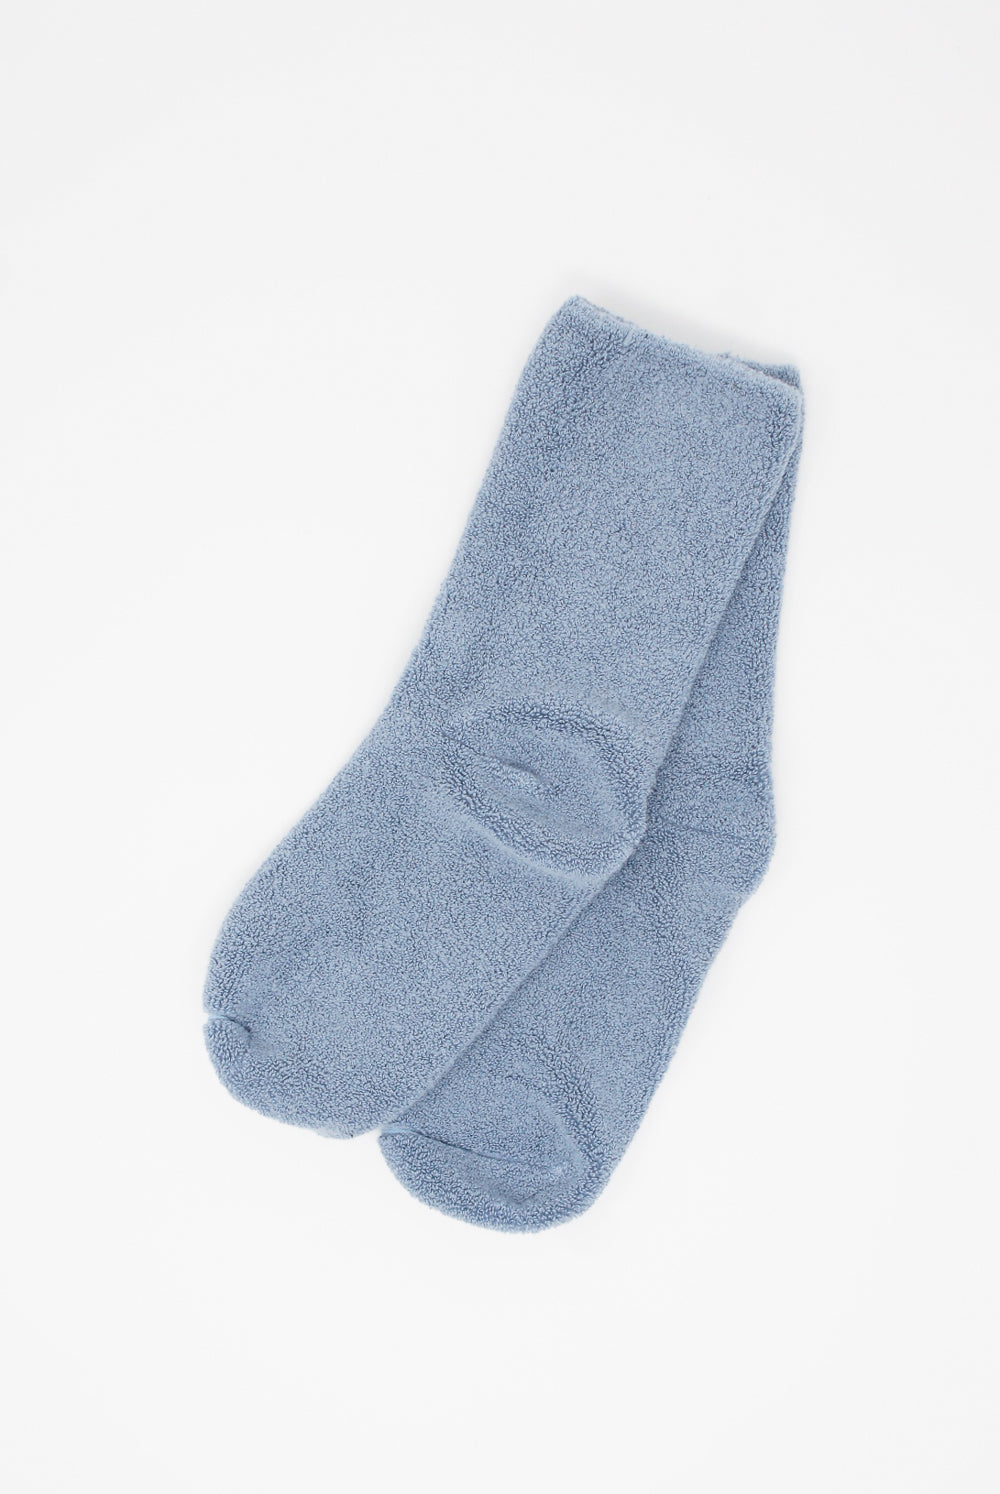 Baserange - Buckle Overankle Sock in Cove Blue